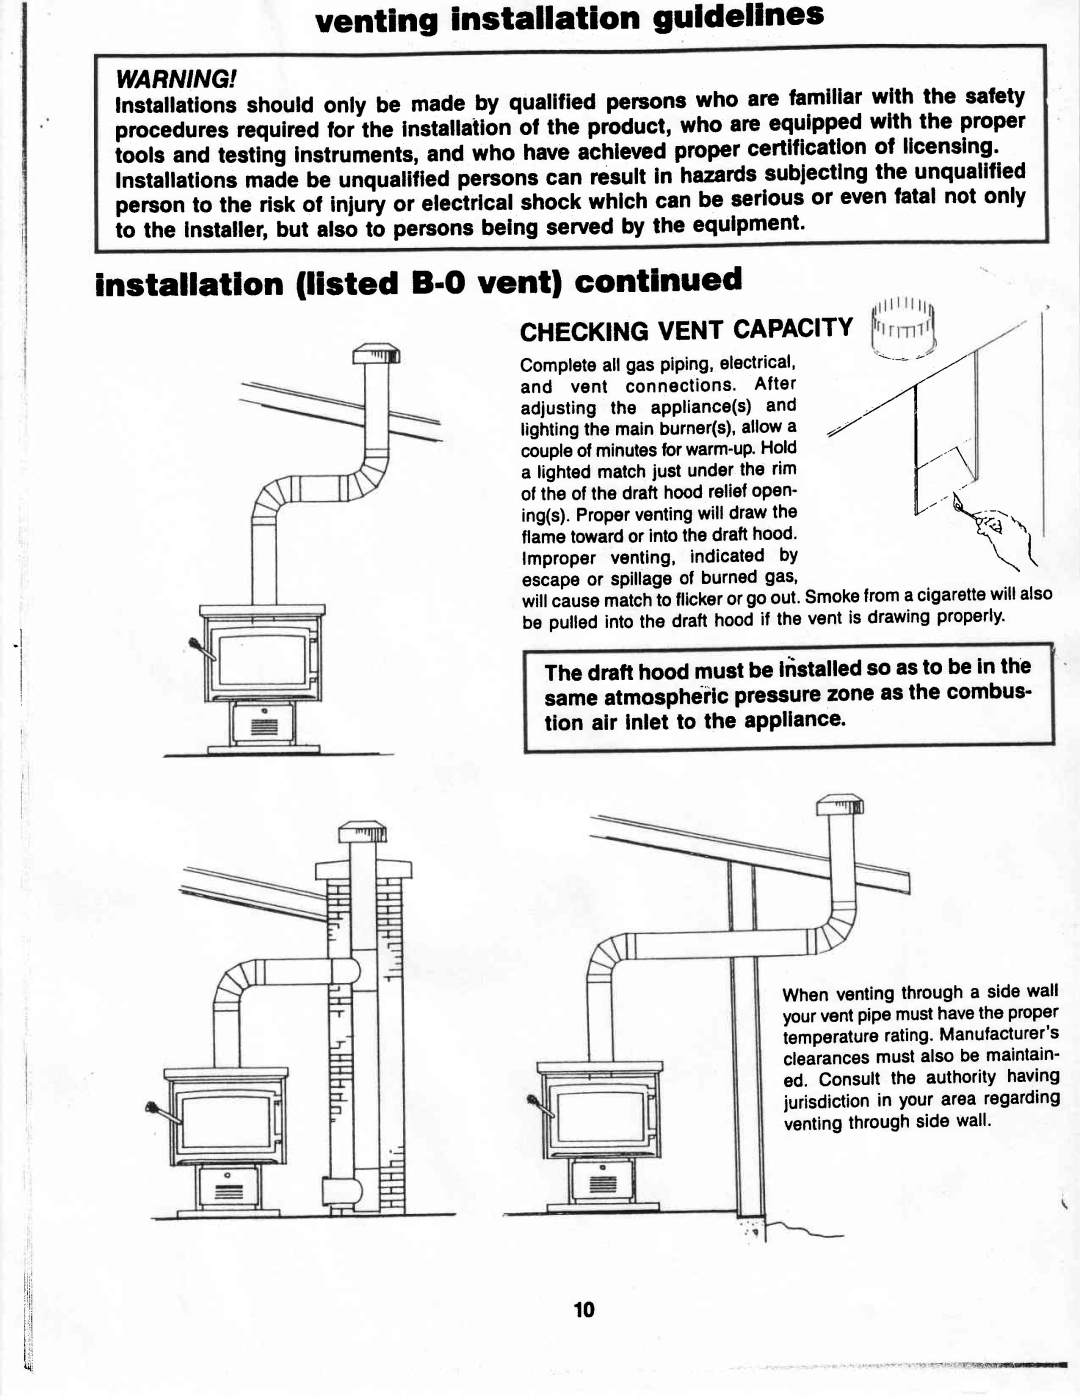 Vermont Casting G400 owner manual venting installation guldellnes, installatlon llisted B.OYentl continued, Warnng 